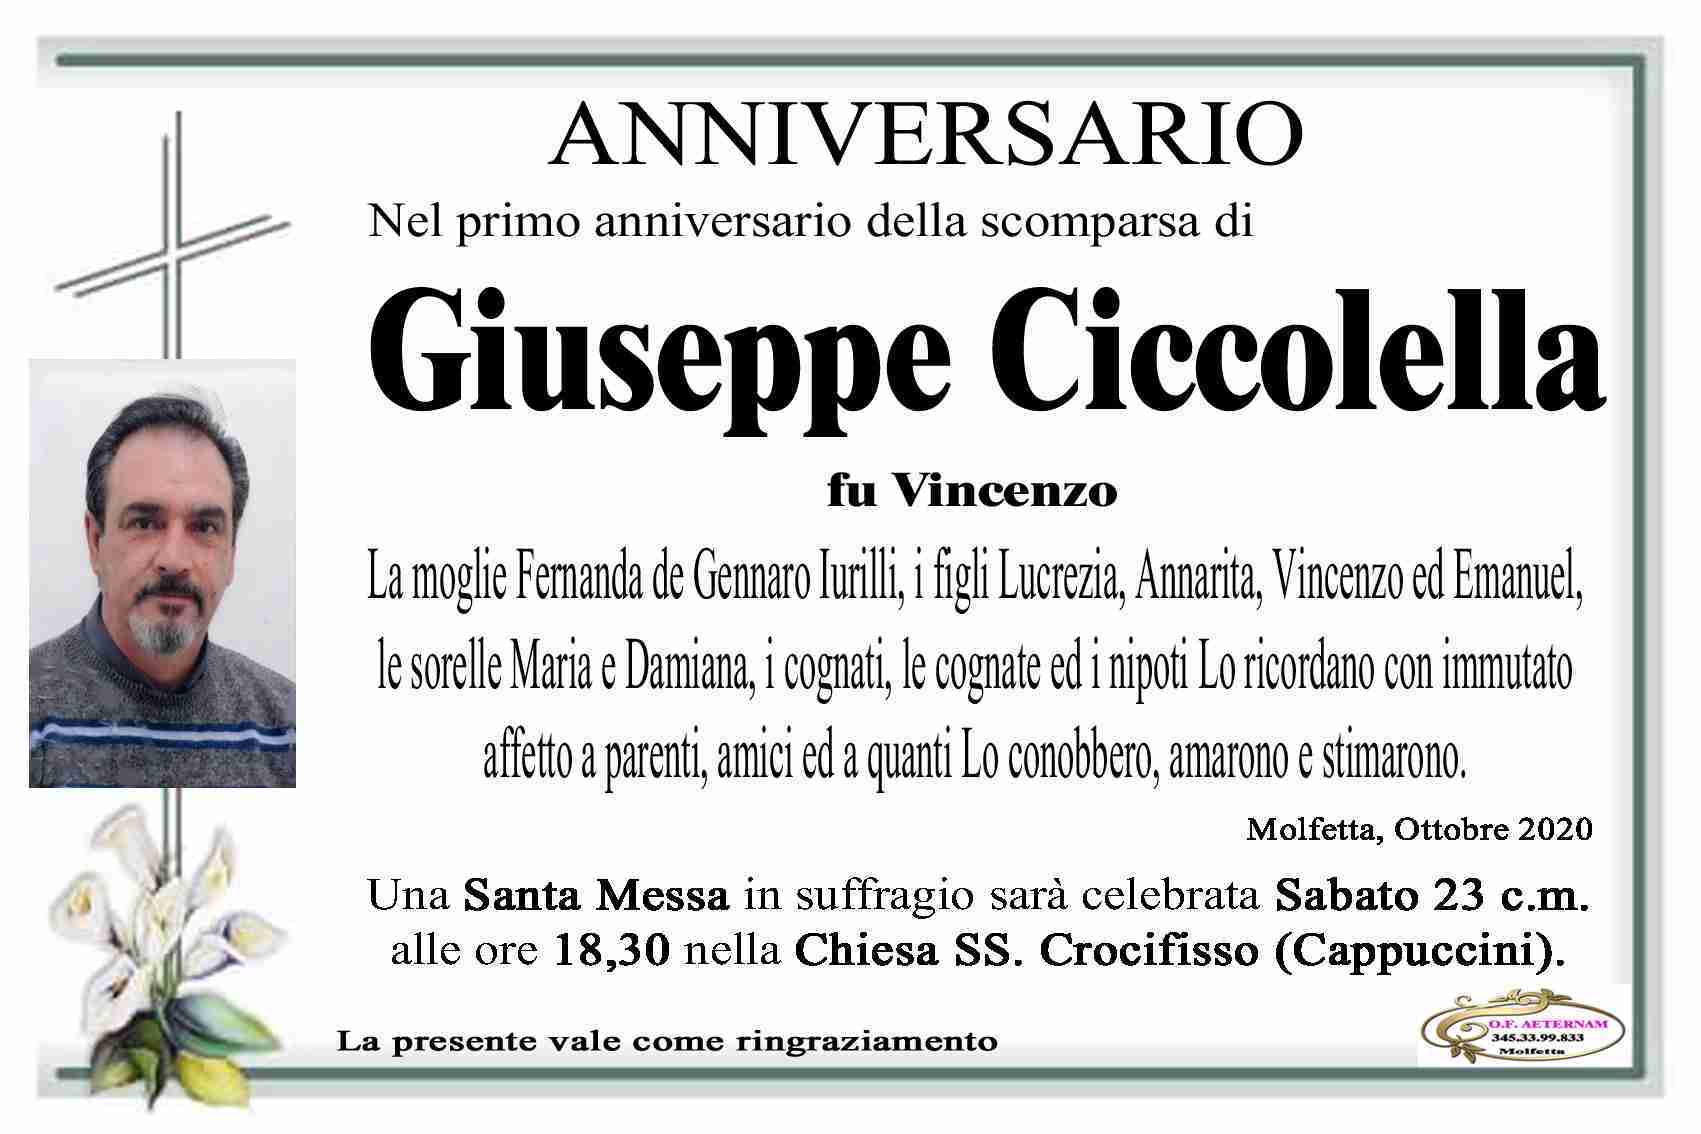 Giuseppe Ciccolella